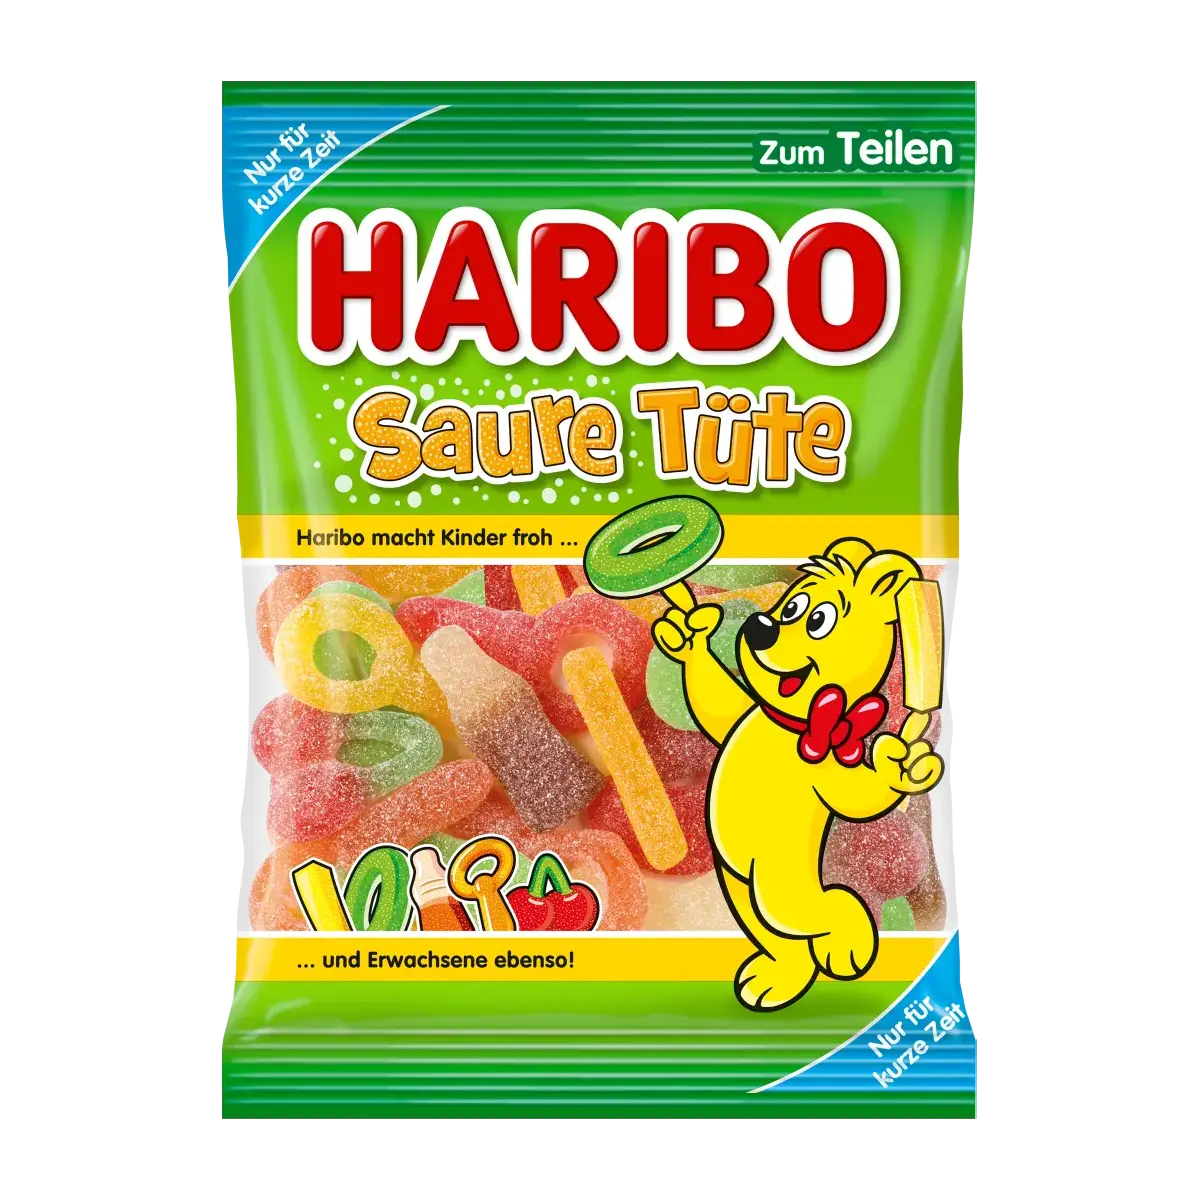 Haribo Saure Tüte - the Sour Bag, 175 g